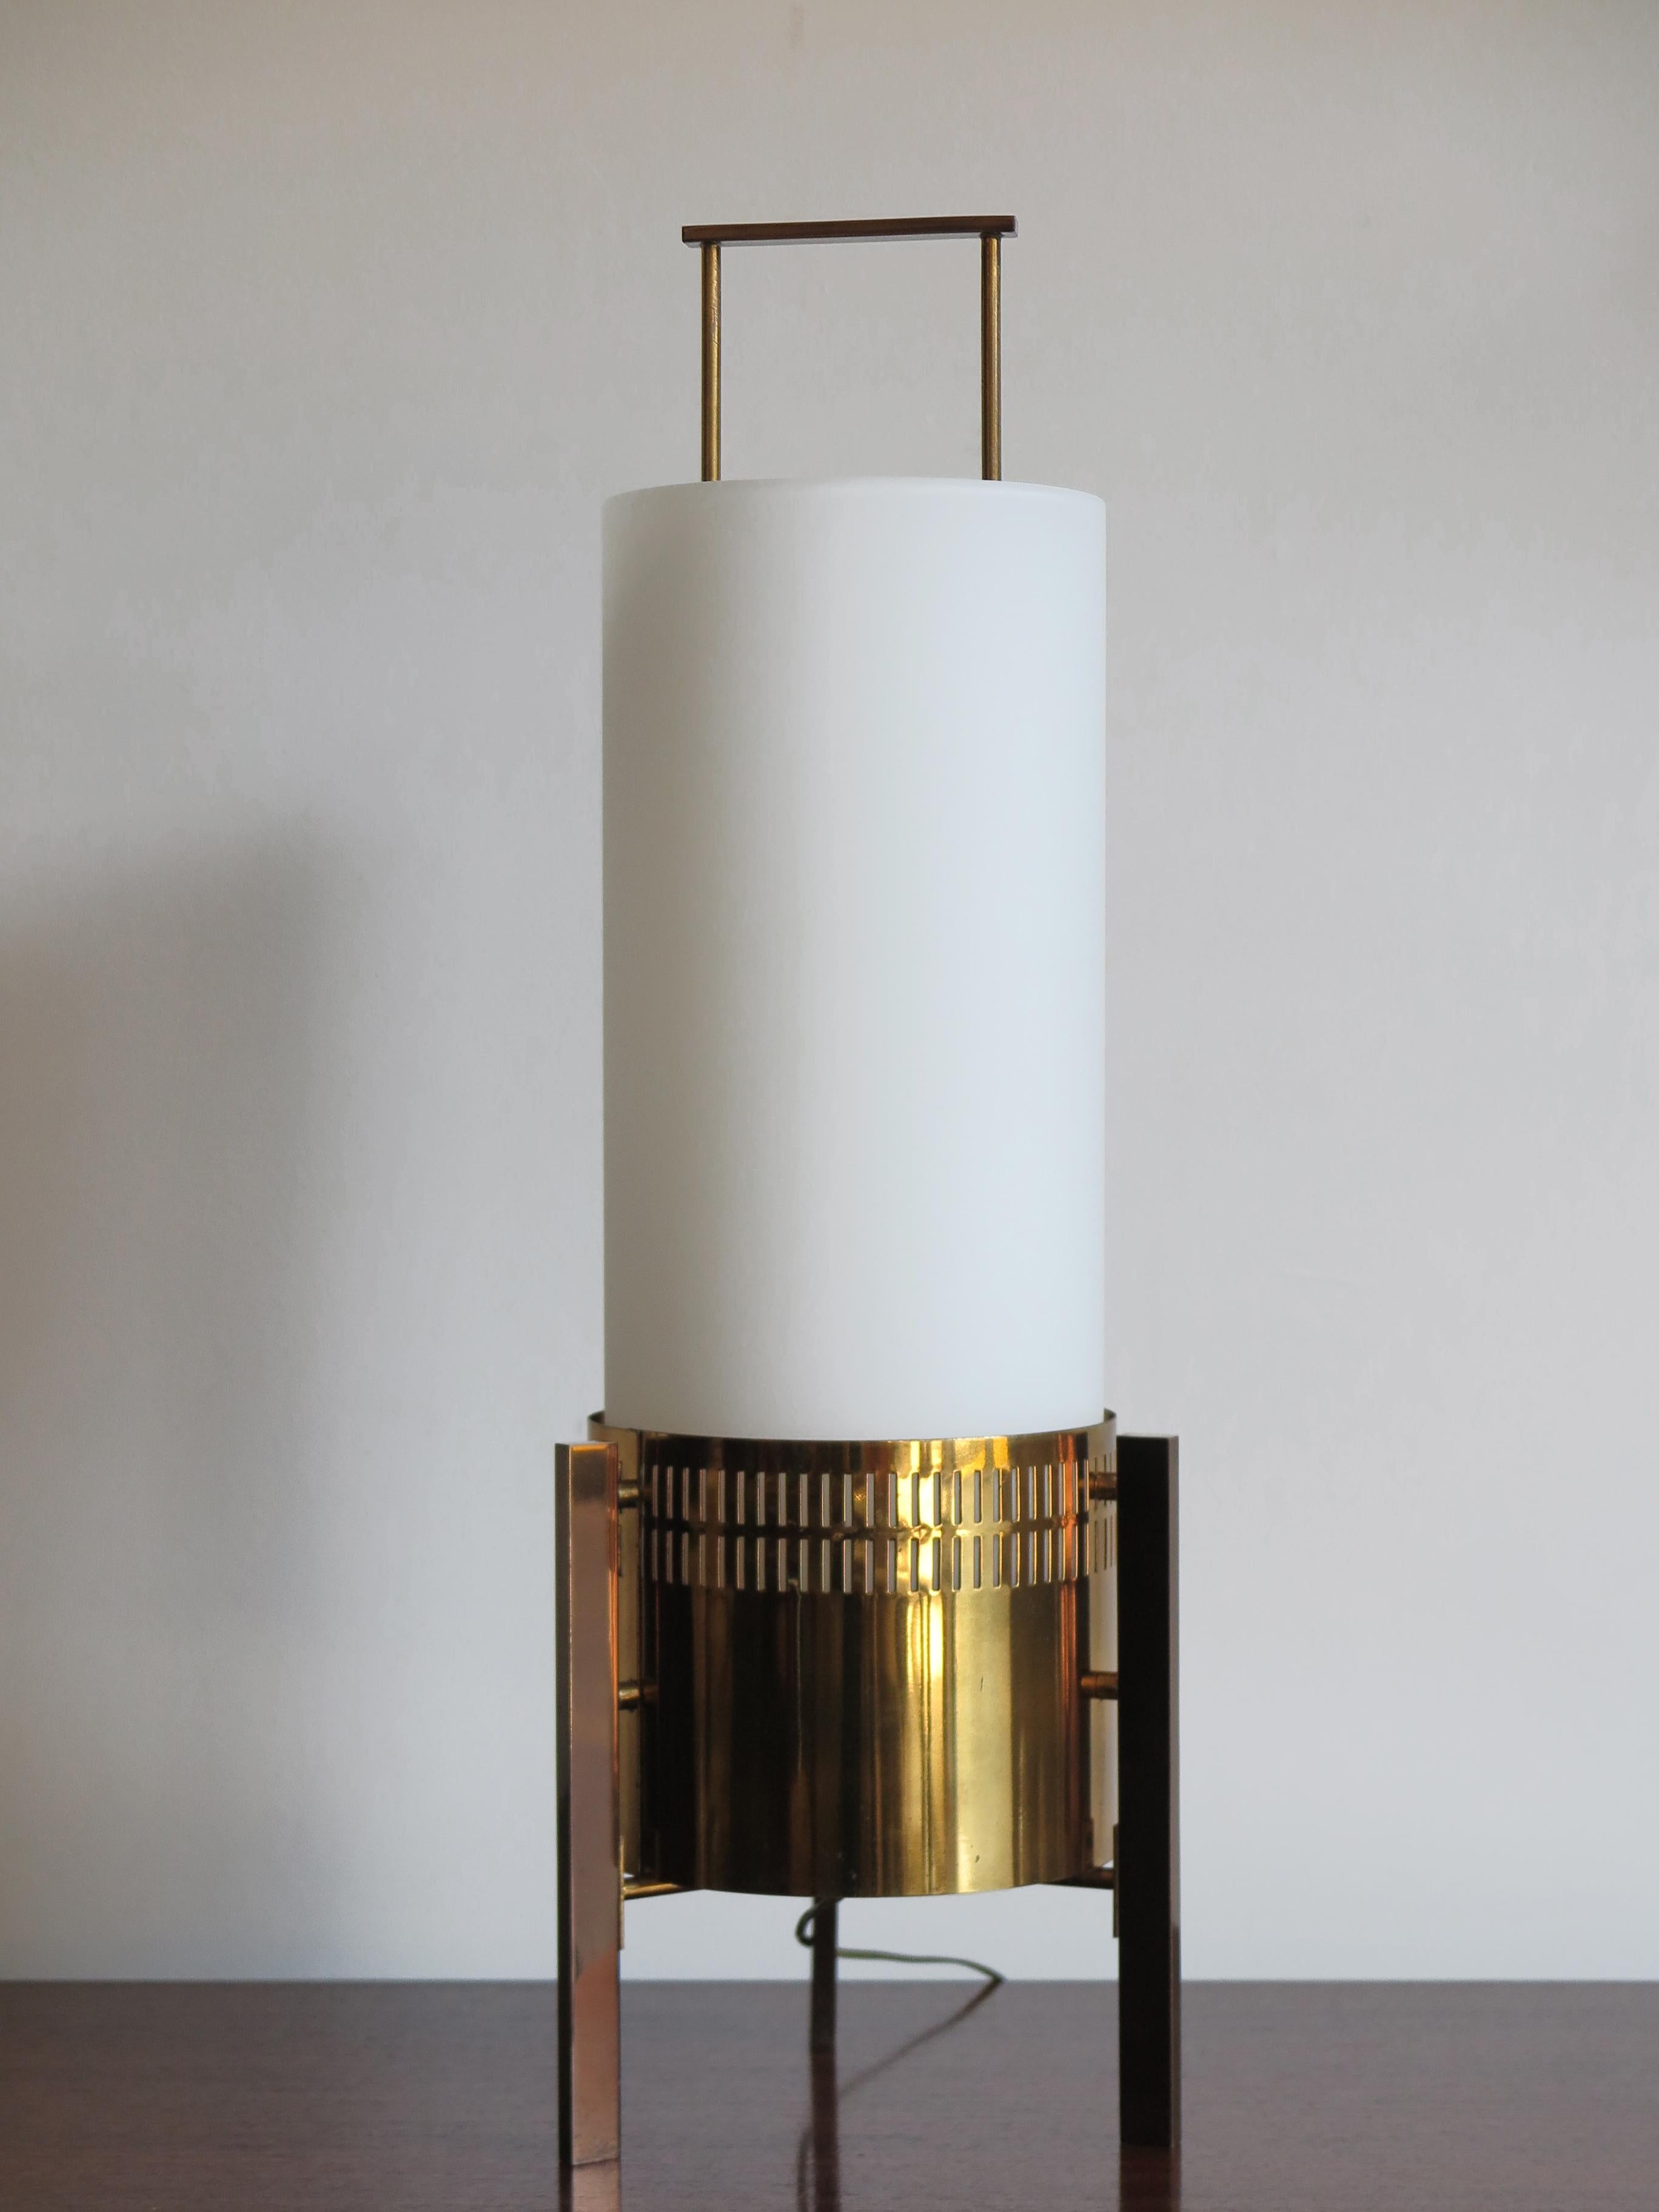 Mid-20th Century Stilnovo Midcentury Italian Brass Glass Table Lamp, Floor Lamp 1950s For Sale